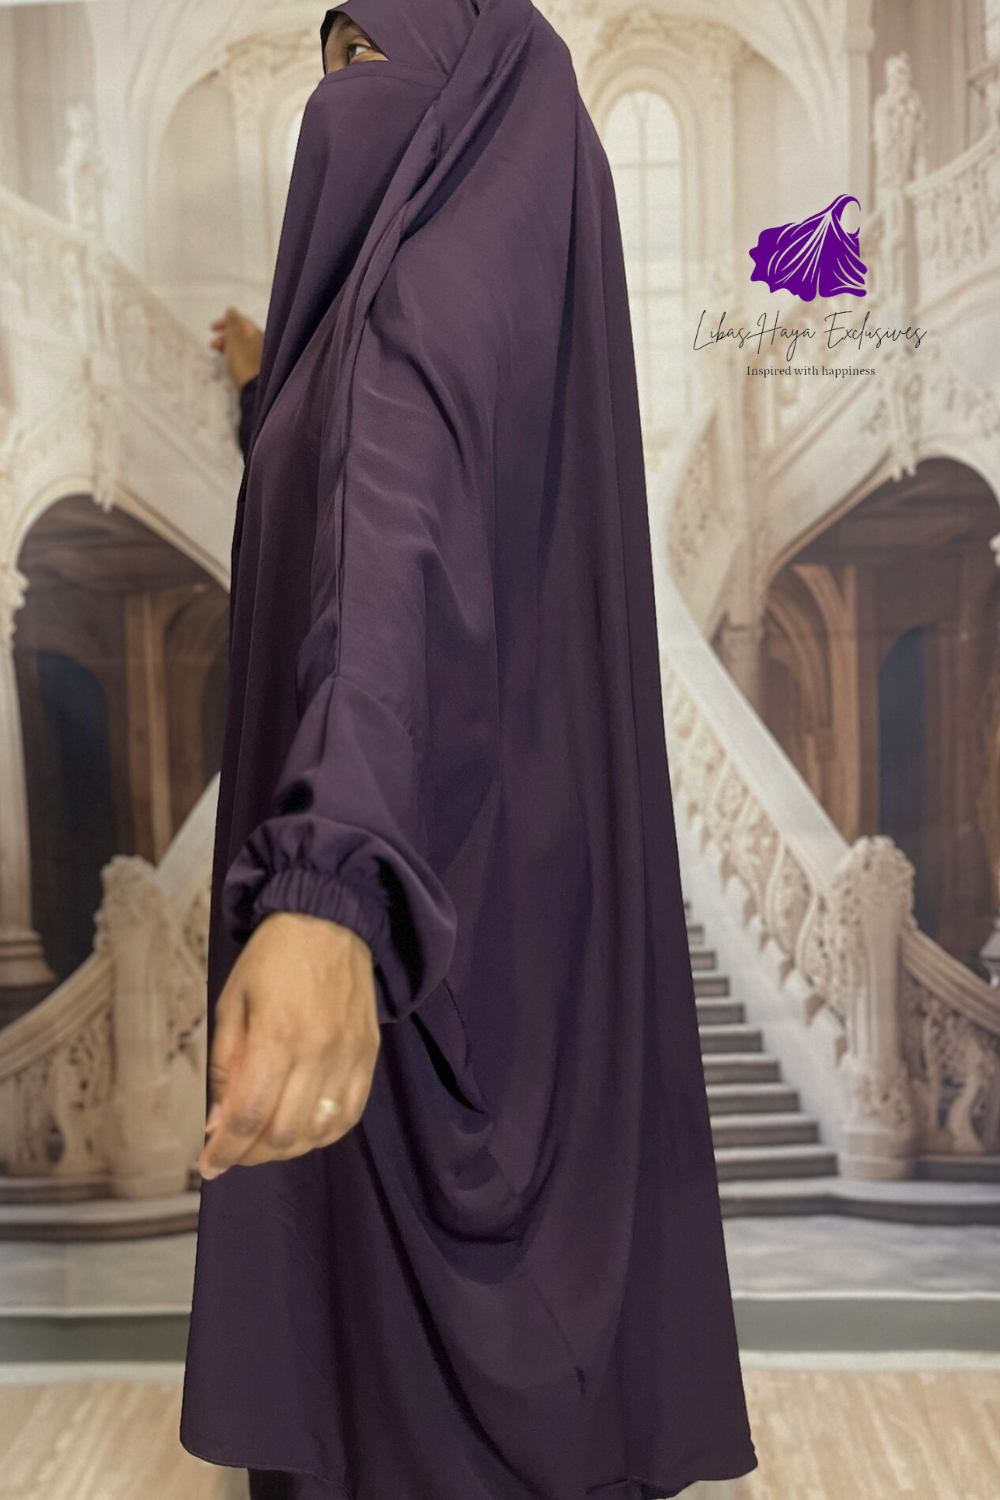 jilbab with elastic cuff sleeves